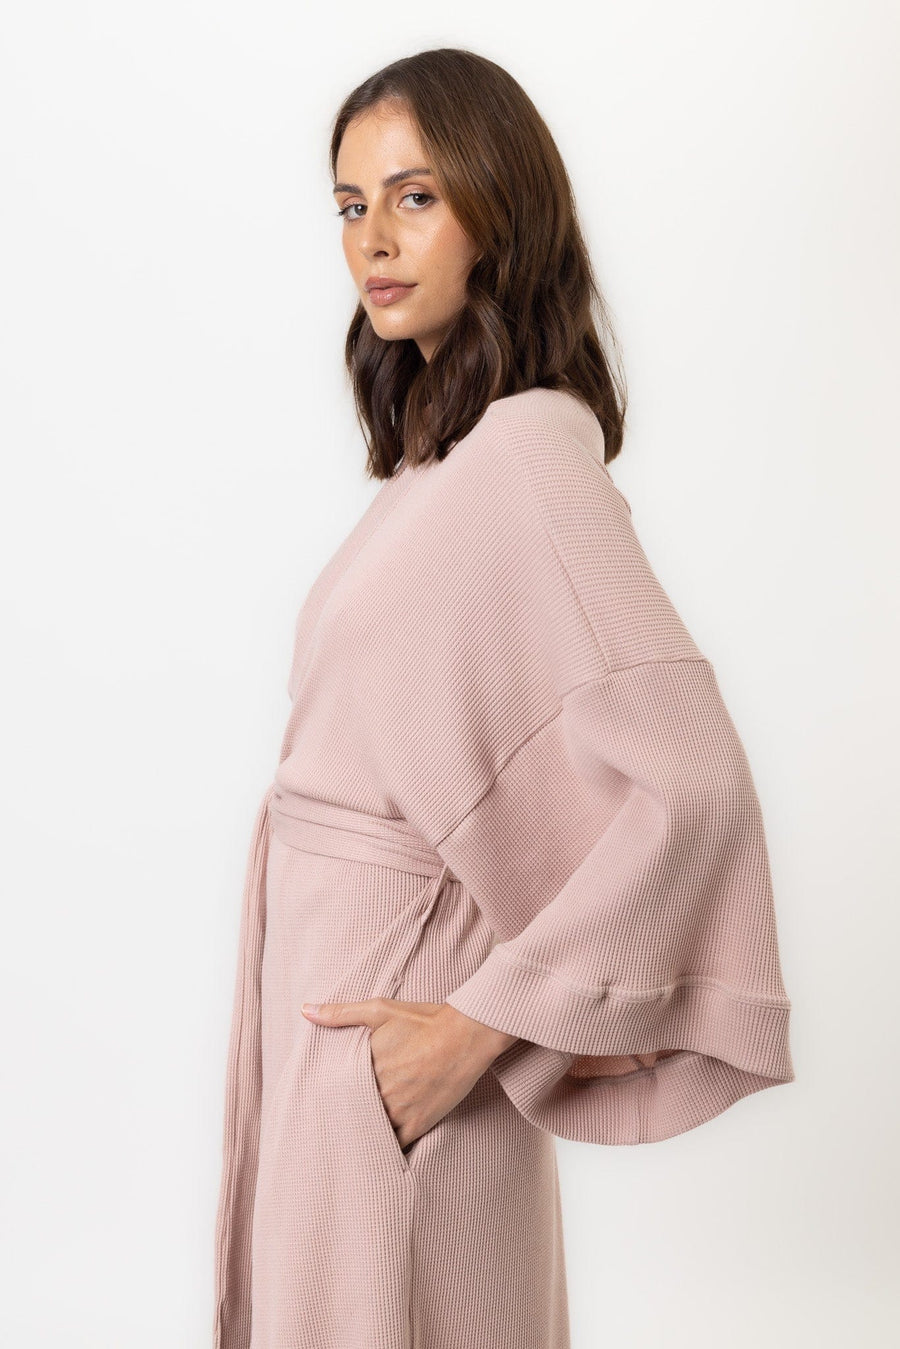 Belle Robe | Dusty Pink Belle Robe Robes Pajamas Australia Online | Reverie the Label  TOPS Belle Robe